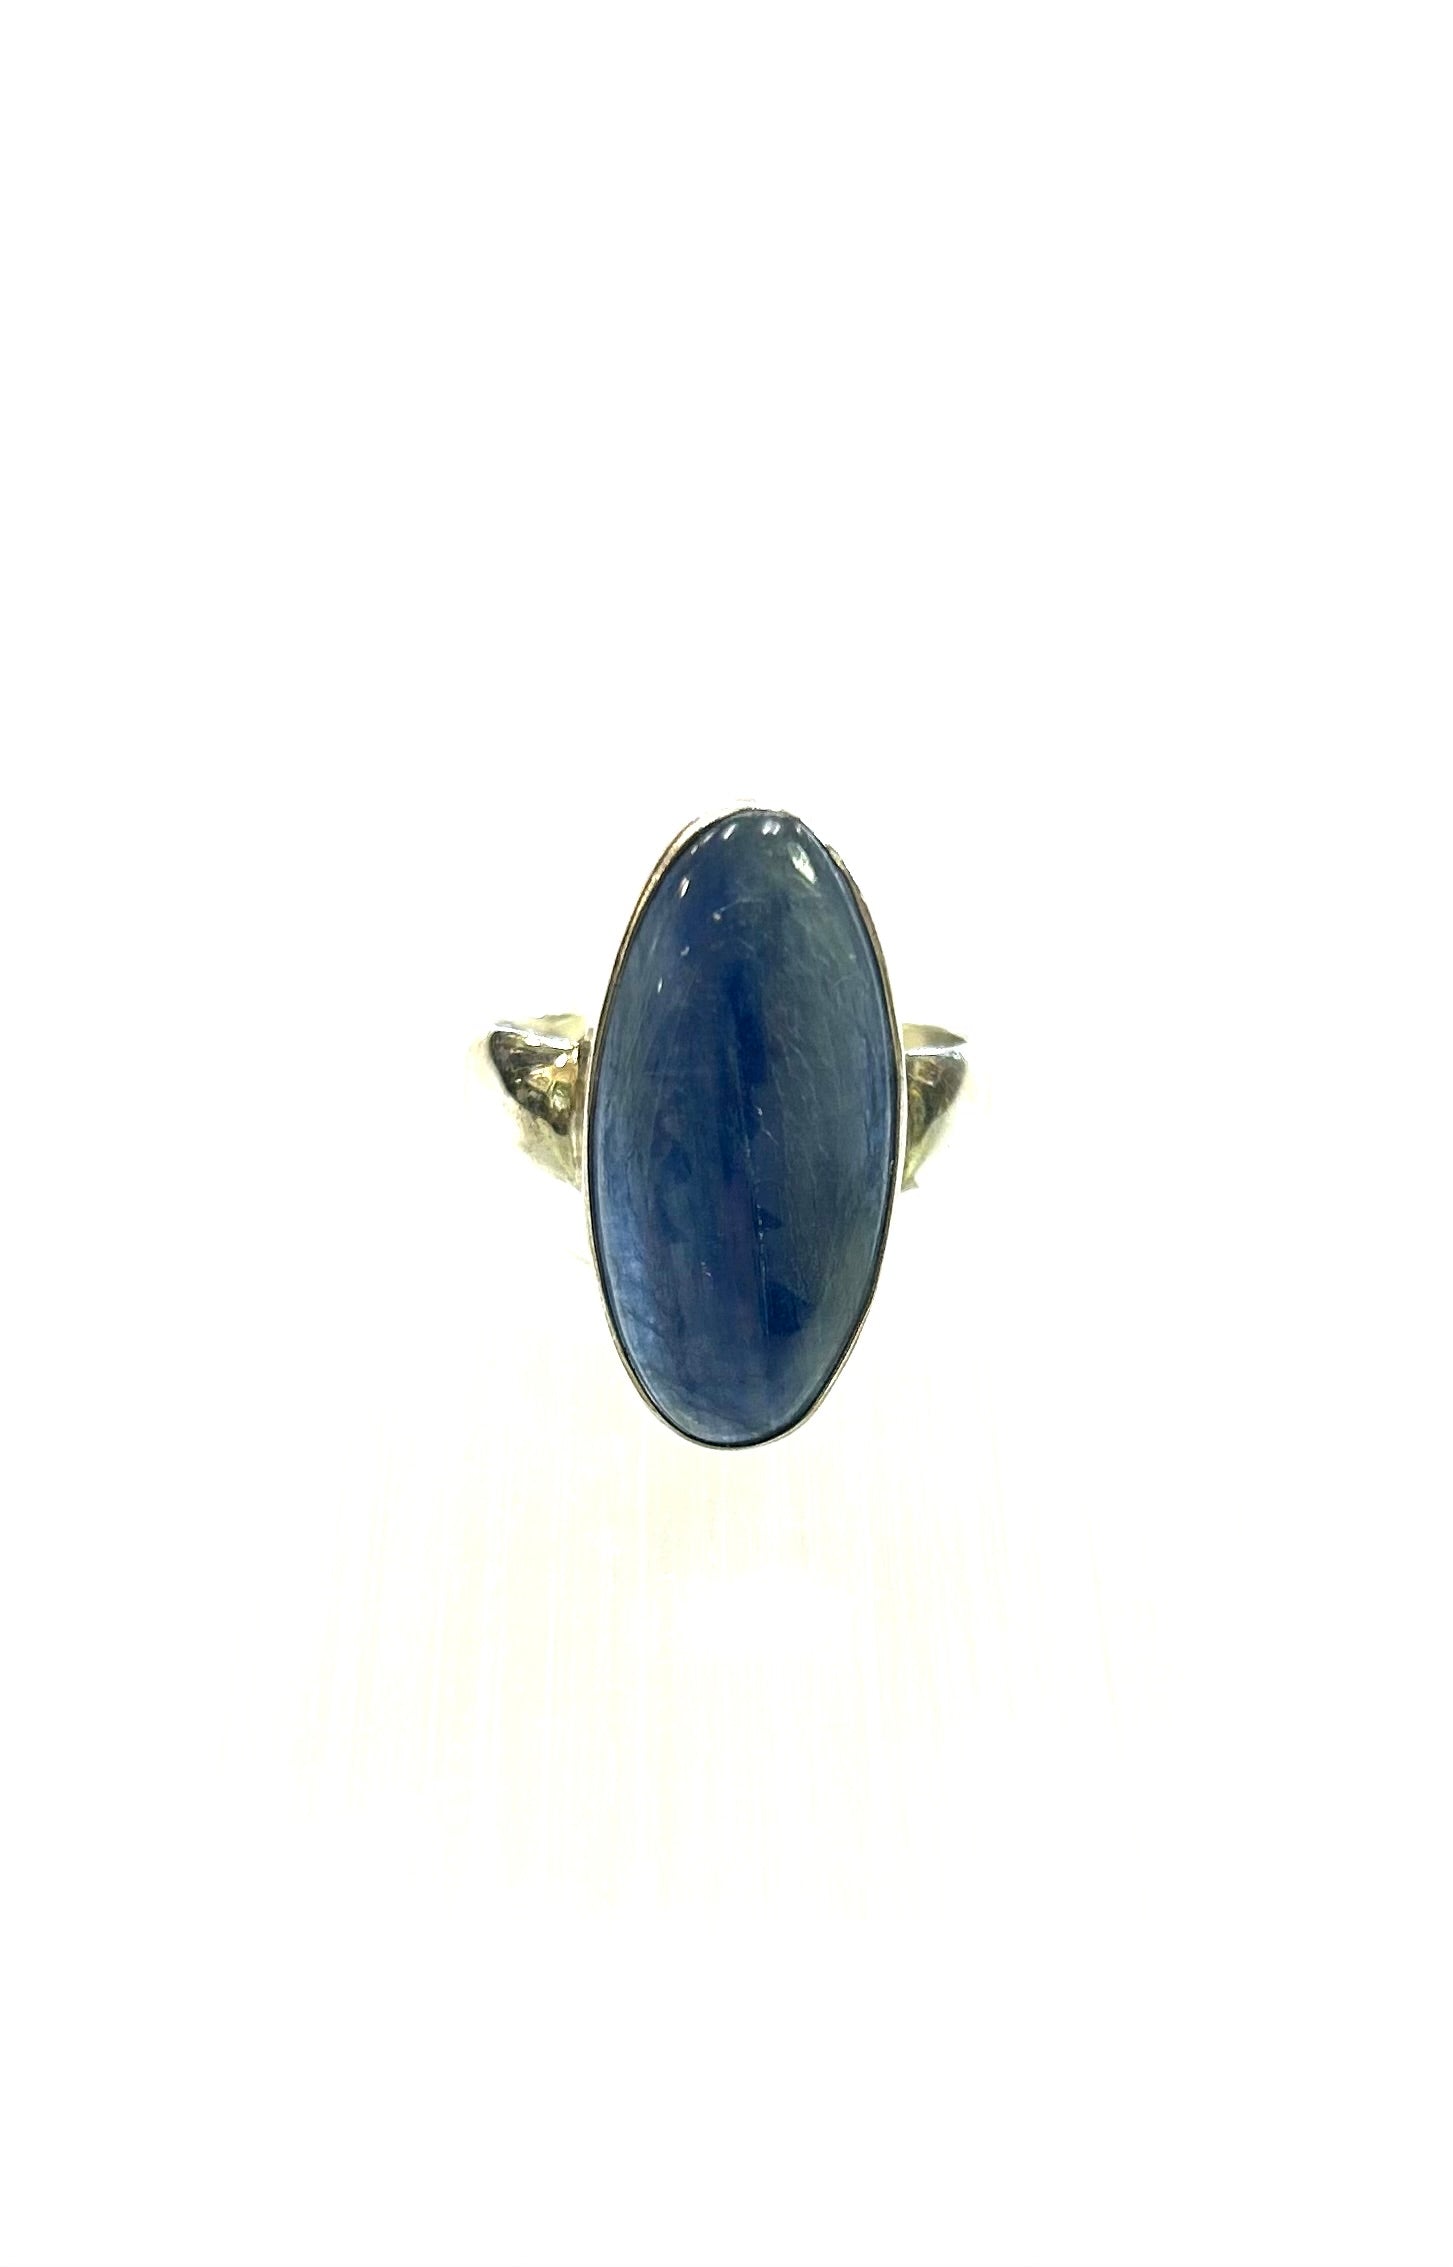 Blue Kyanite Ring ($60) - Lighten Up Shop